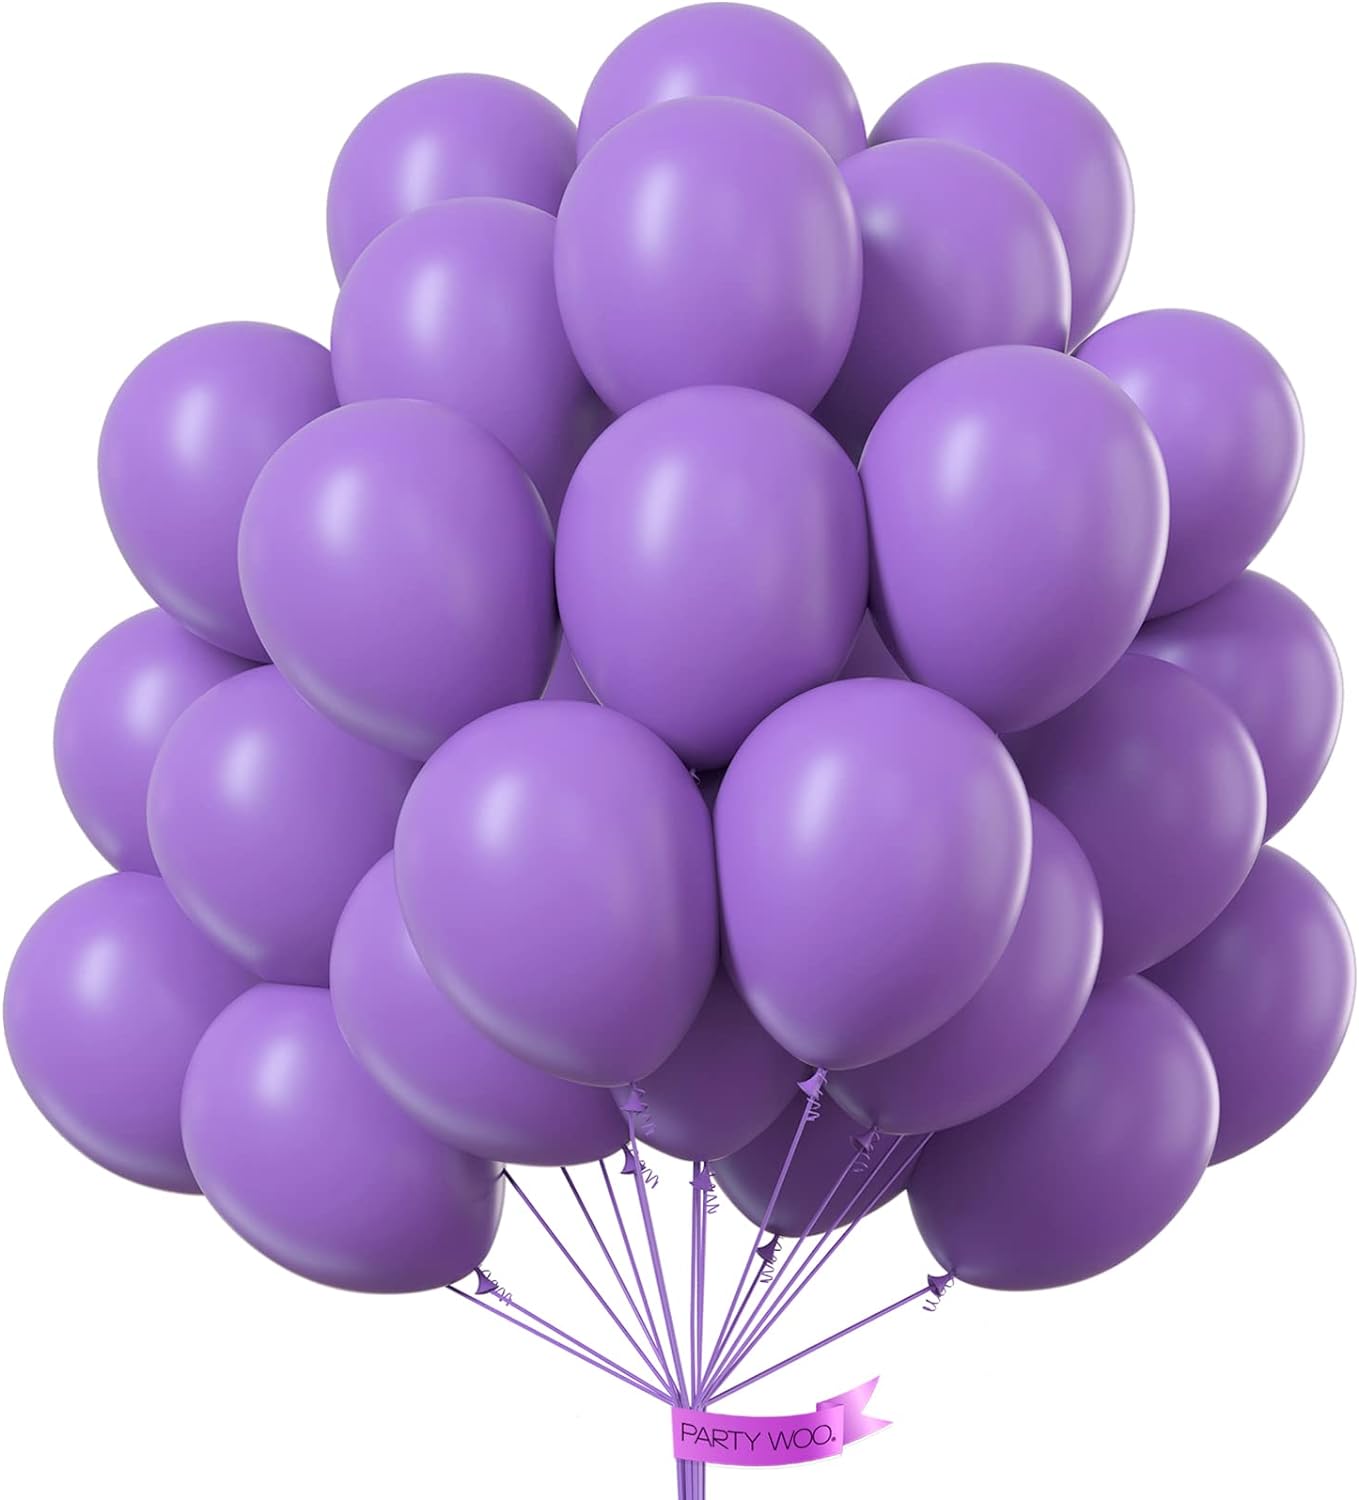 10 Inch Standard Balloons